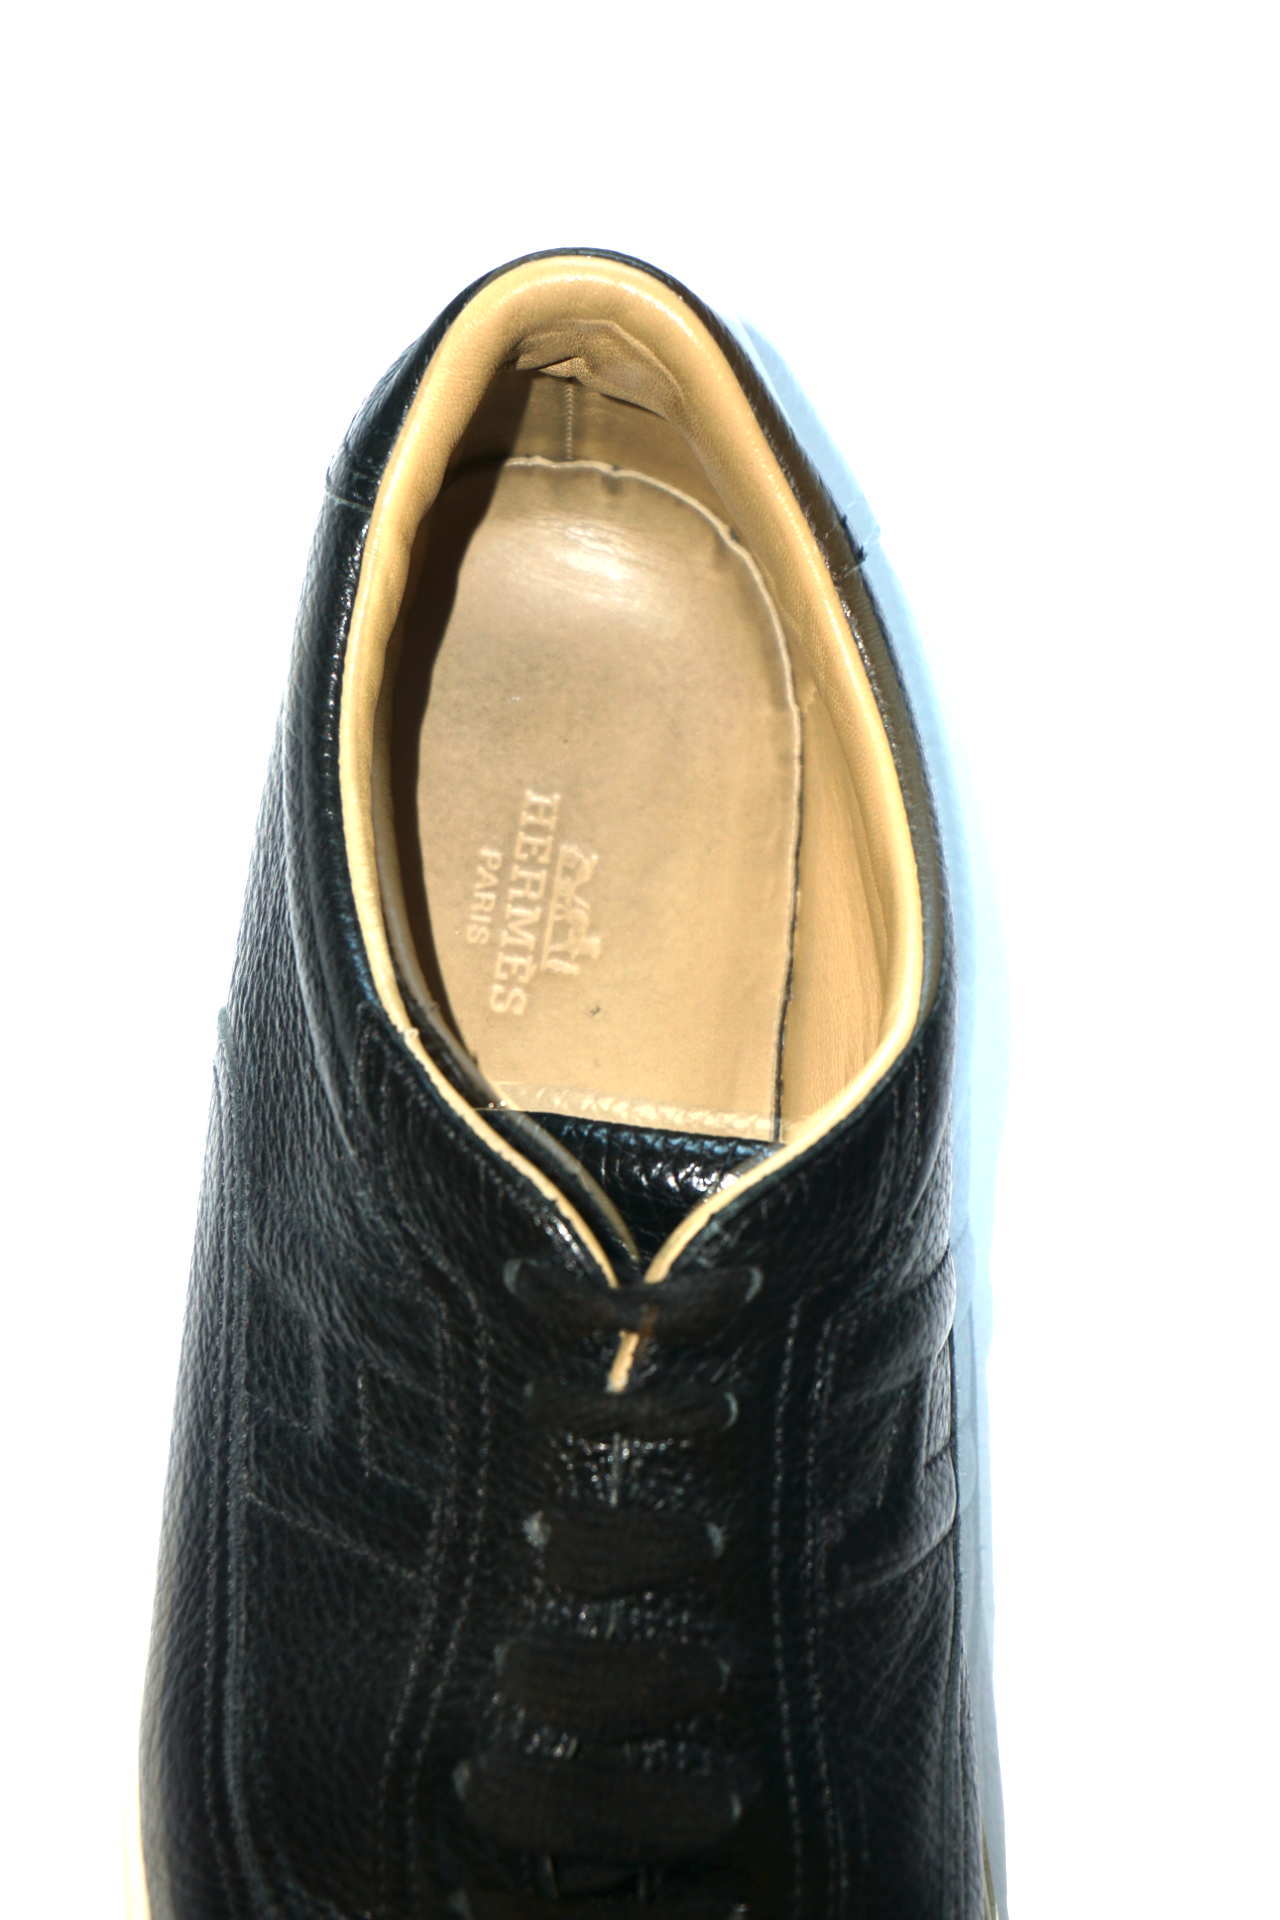 Hermès Black Leather Quick Sneakers Size 42